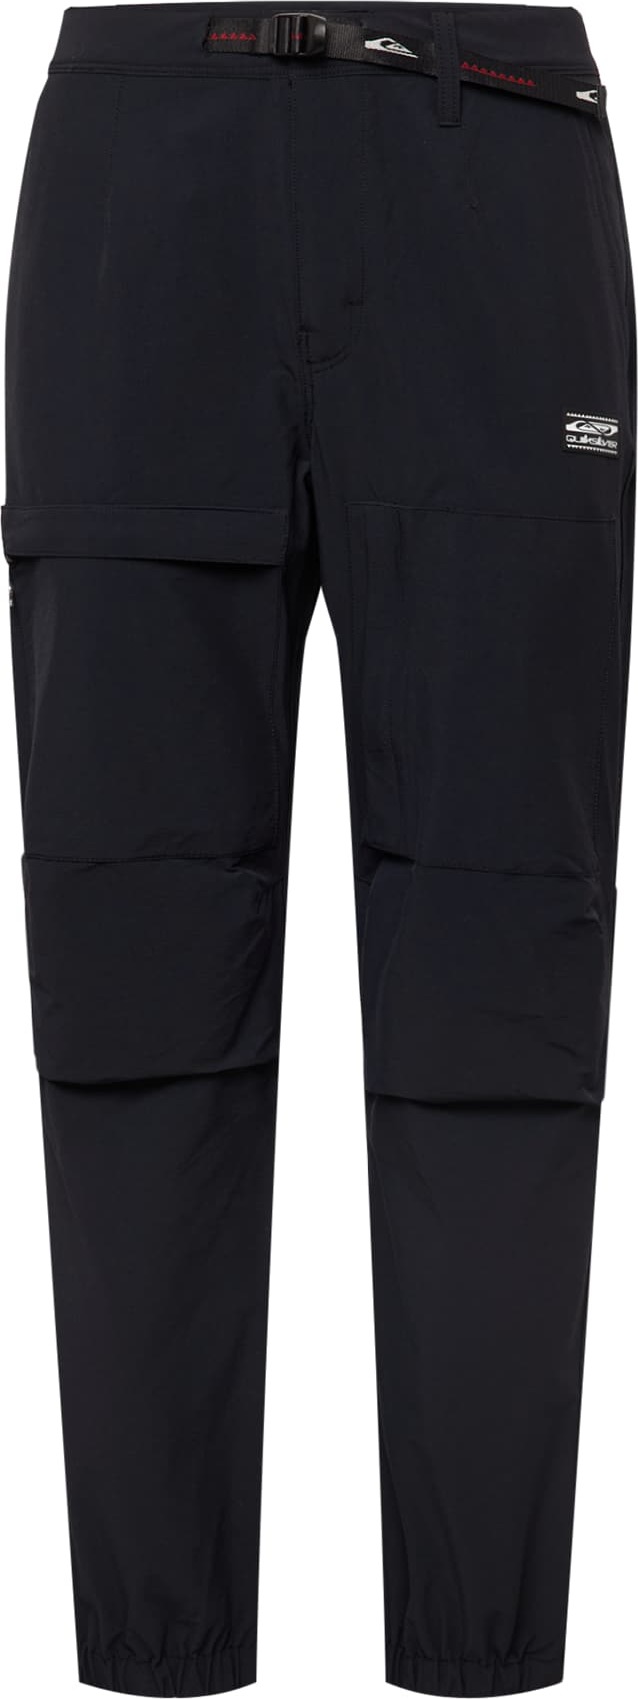 QUIKSILVER Outdoorové kalhoty 'Sea Bed' černá / bílá